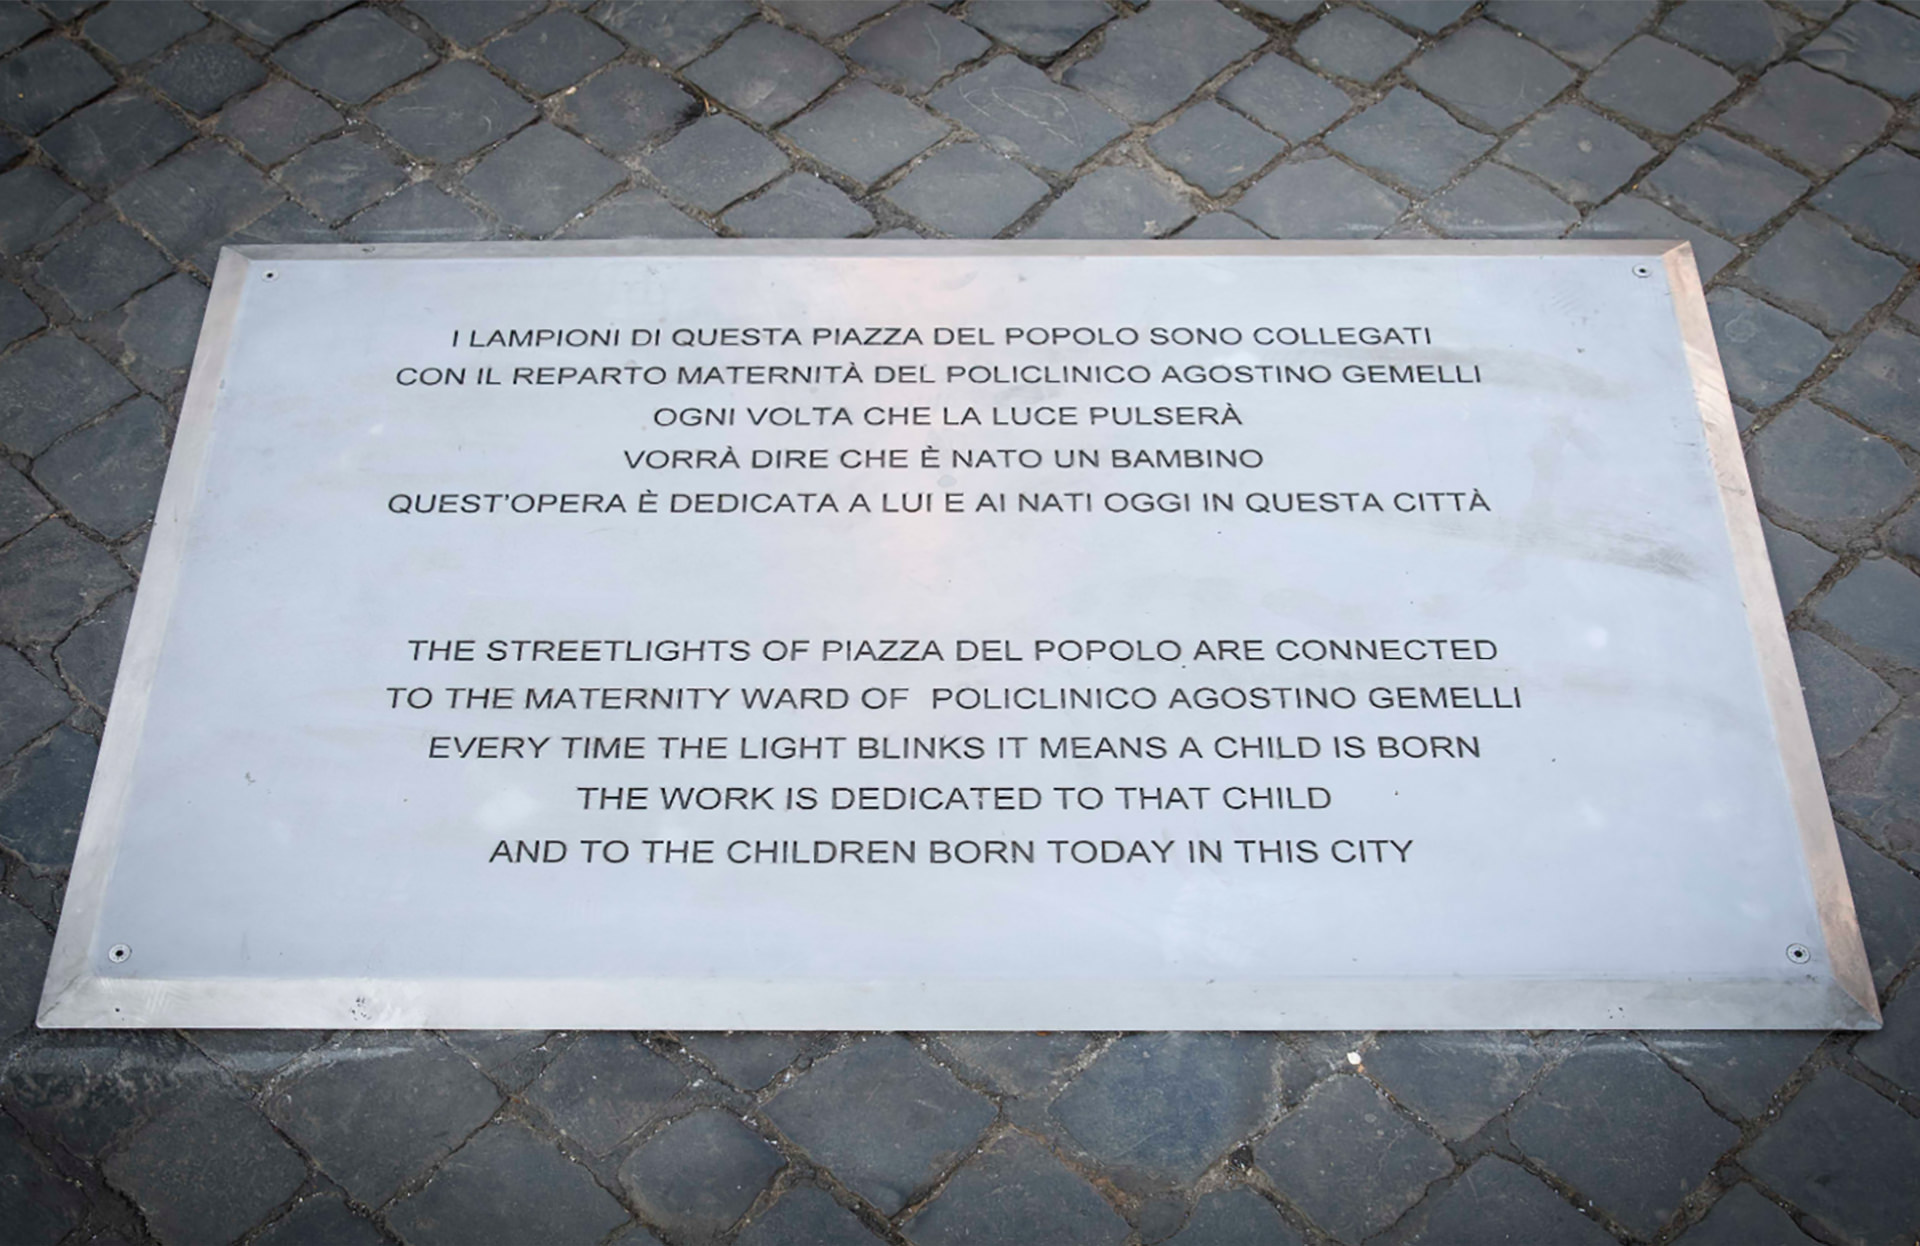 The plaque that explains the Acea project “Ai nati oggi”